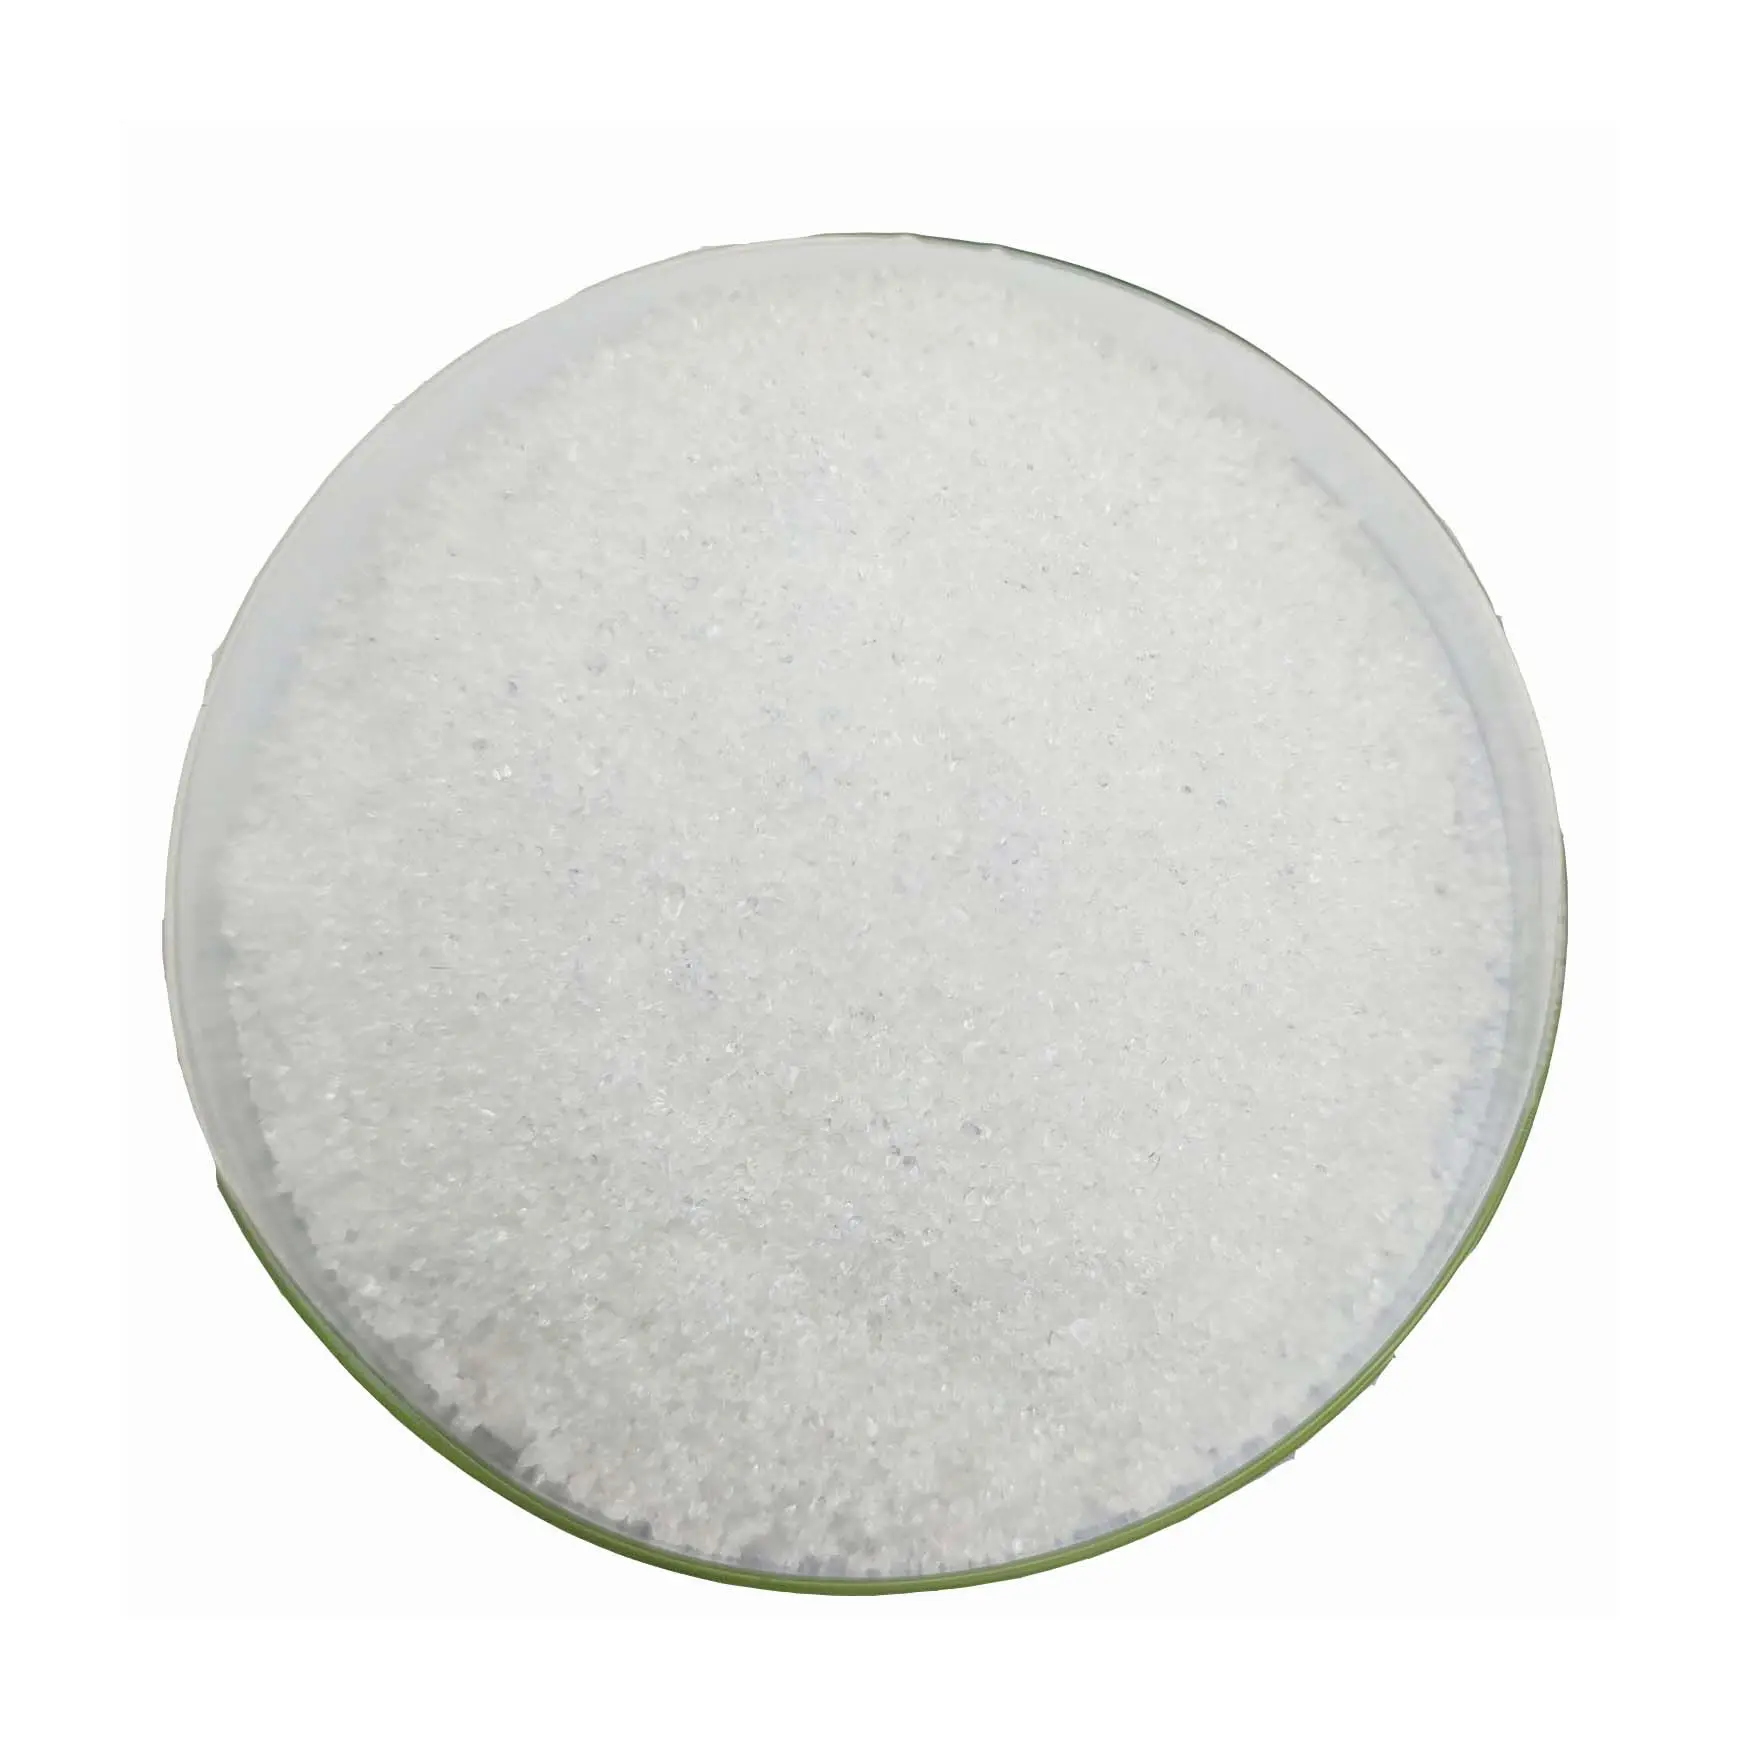 Fosfato de urea 17-44-0 Polvo blanco Soluble en agua Fertilizante especial UP